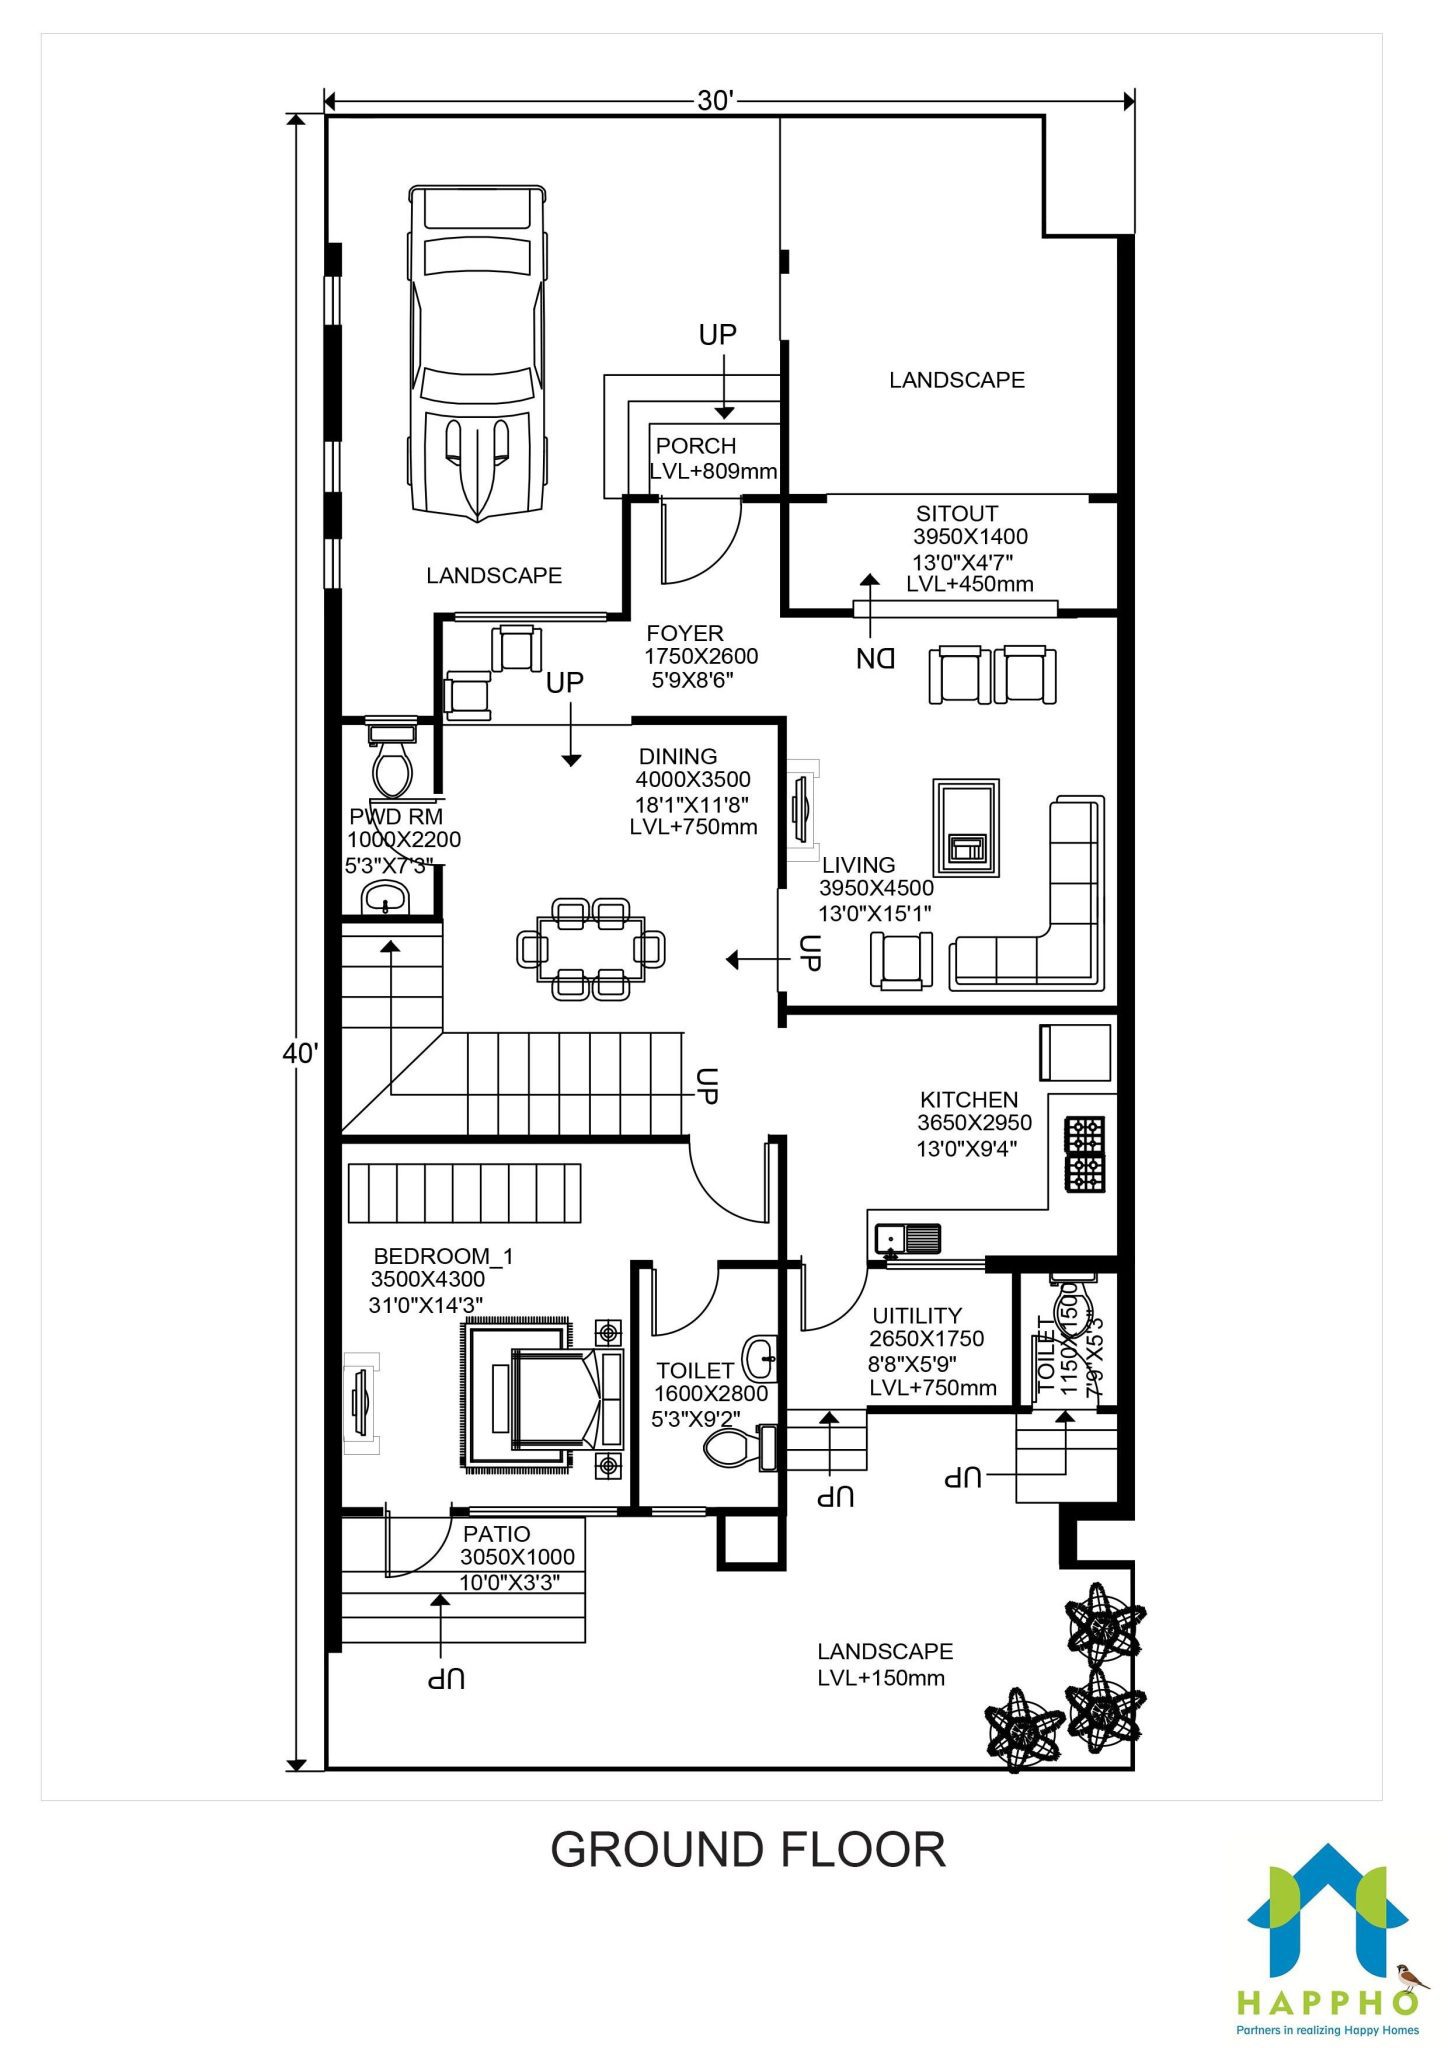 Floor Plan for 30 X 40 Feet Plot 3BHK (1200 Square Feet